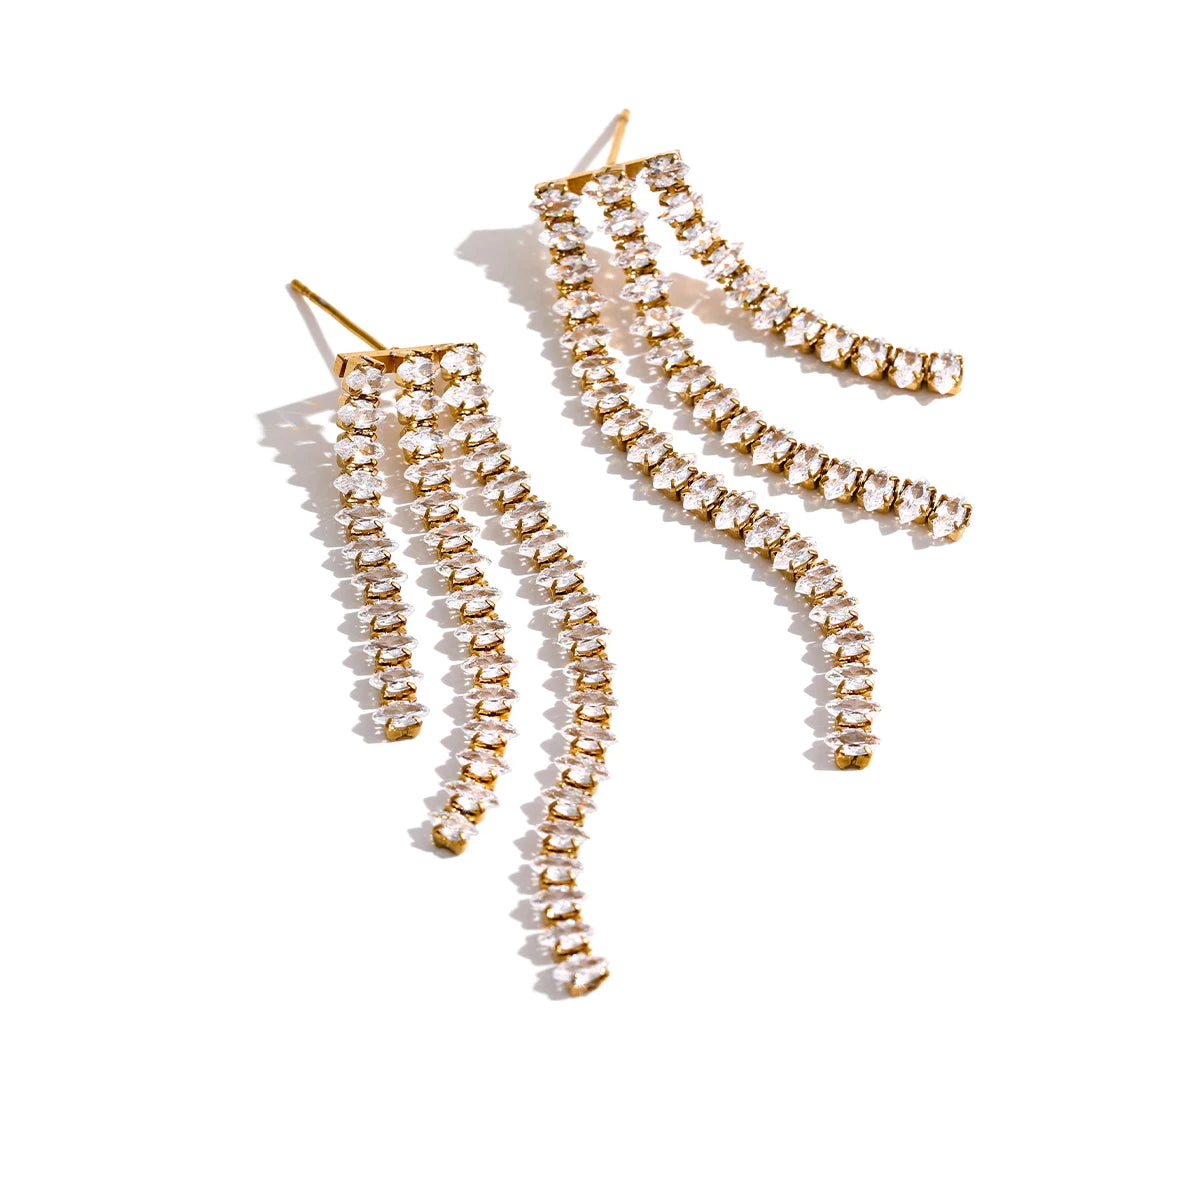 Louisa Ohrringe Yasemen Store Schmuck Accessoires Edelstahl Stainless Steel 14K Vergoldet Gold jewel jewelry earring